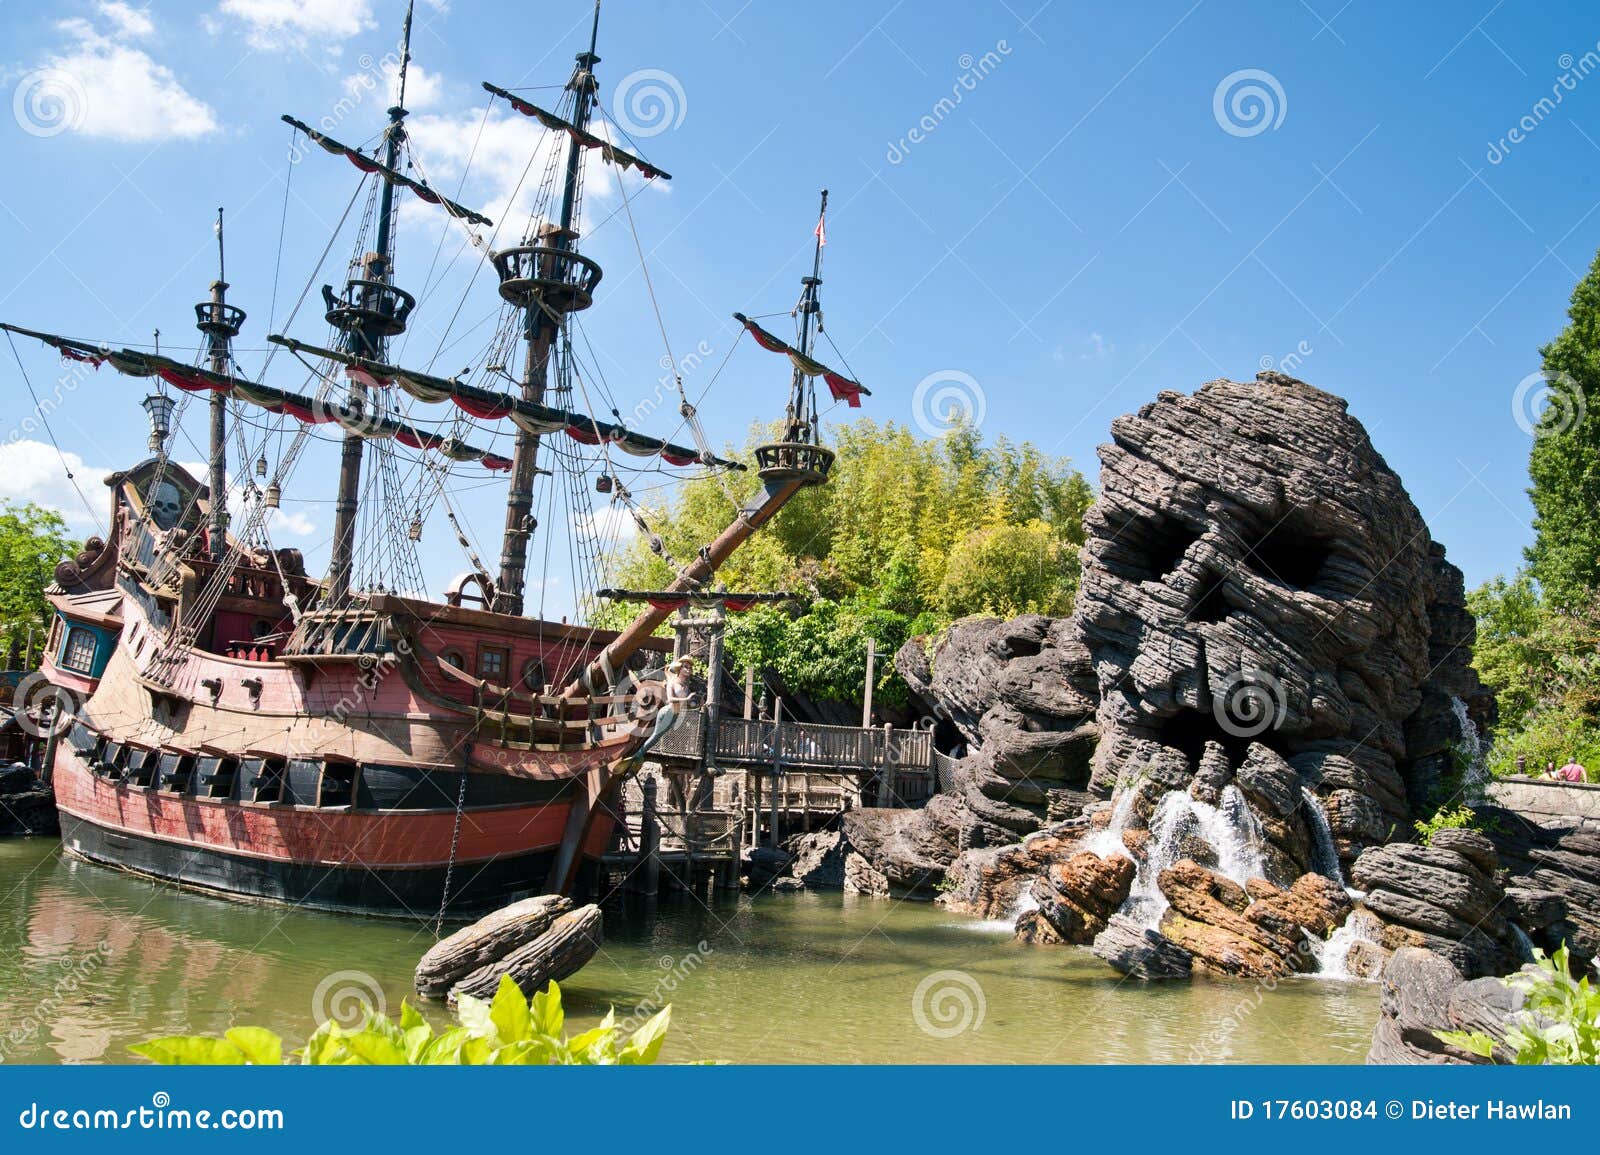 359 Pirates Caribbean Theme Stock Photos - Free & Royalty-Free Stock Photos  from Dreamstime